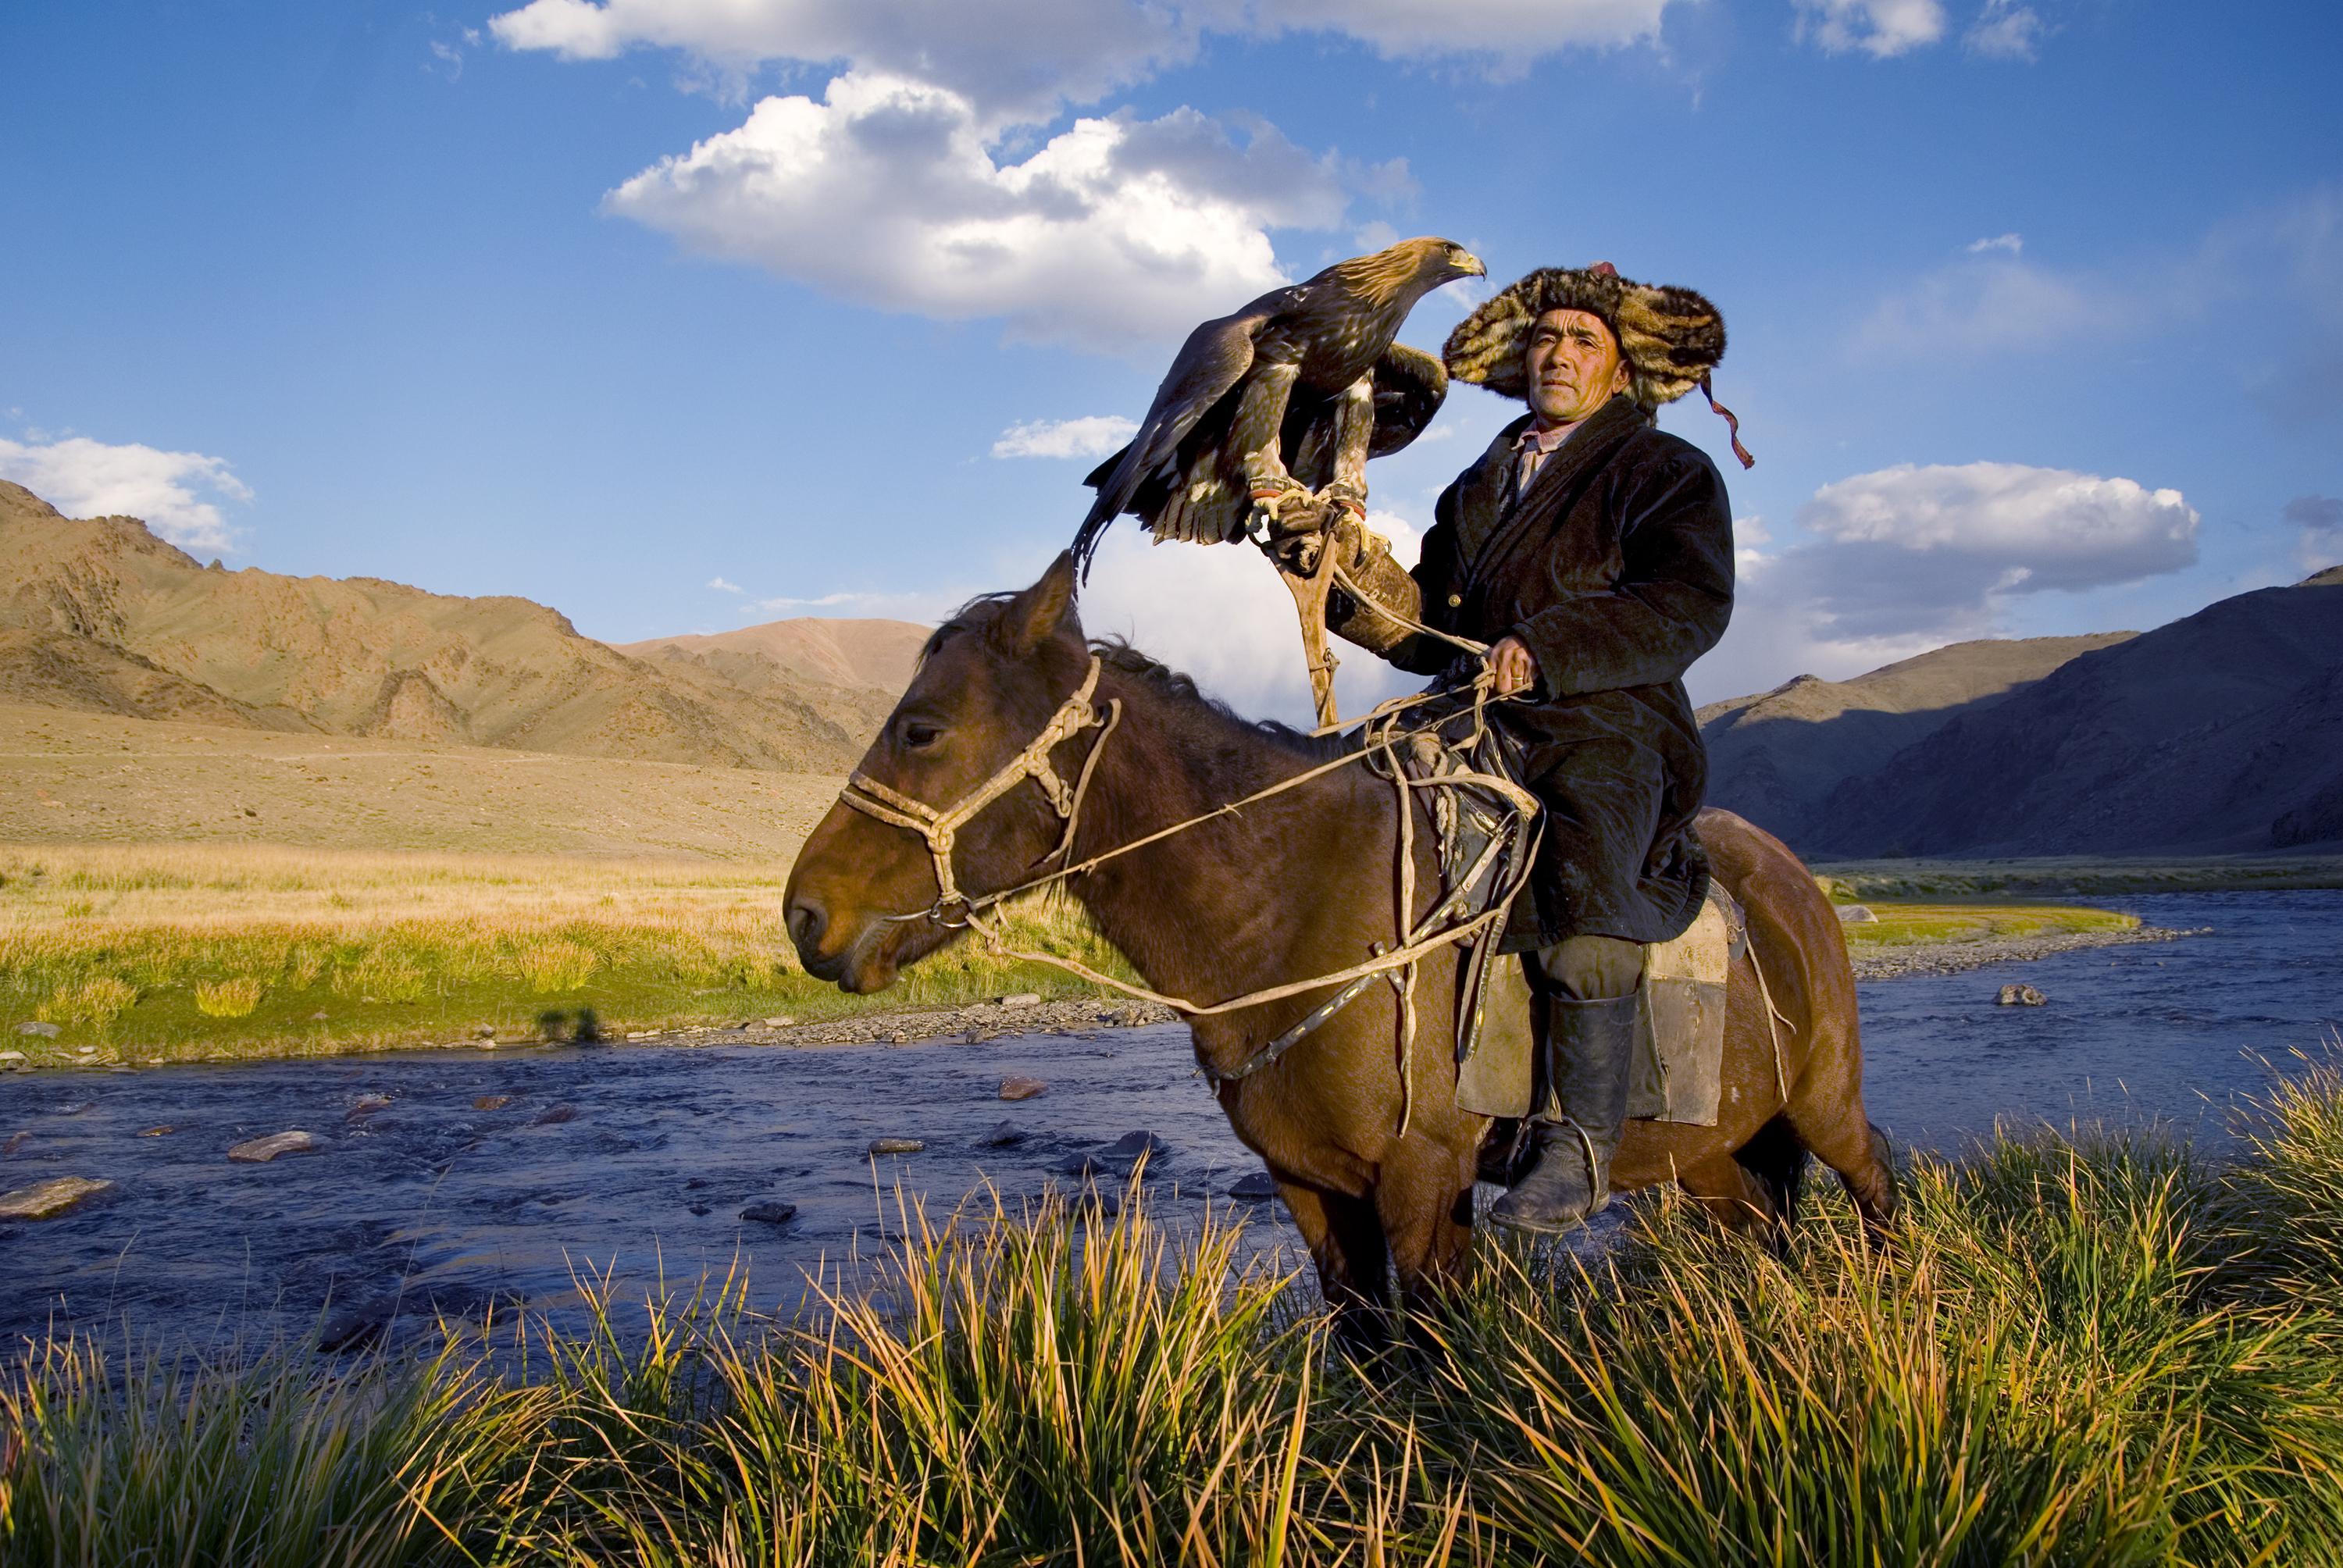 Kazakh Eagle hunter © Rawpixel.com / Shutterstock